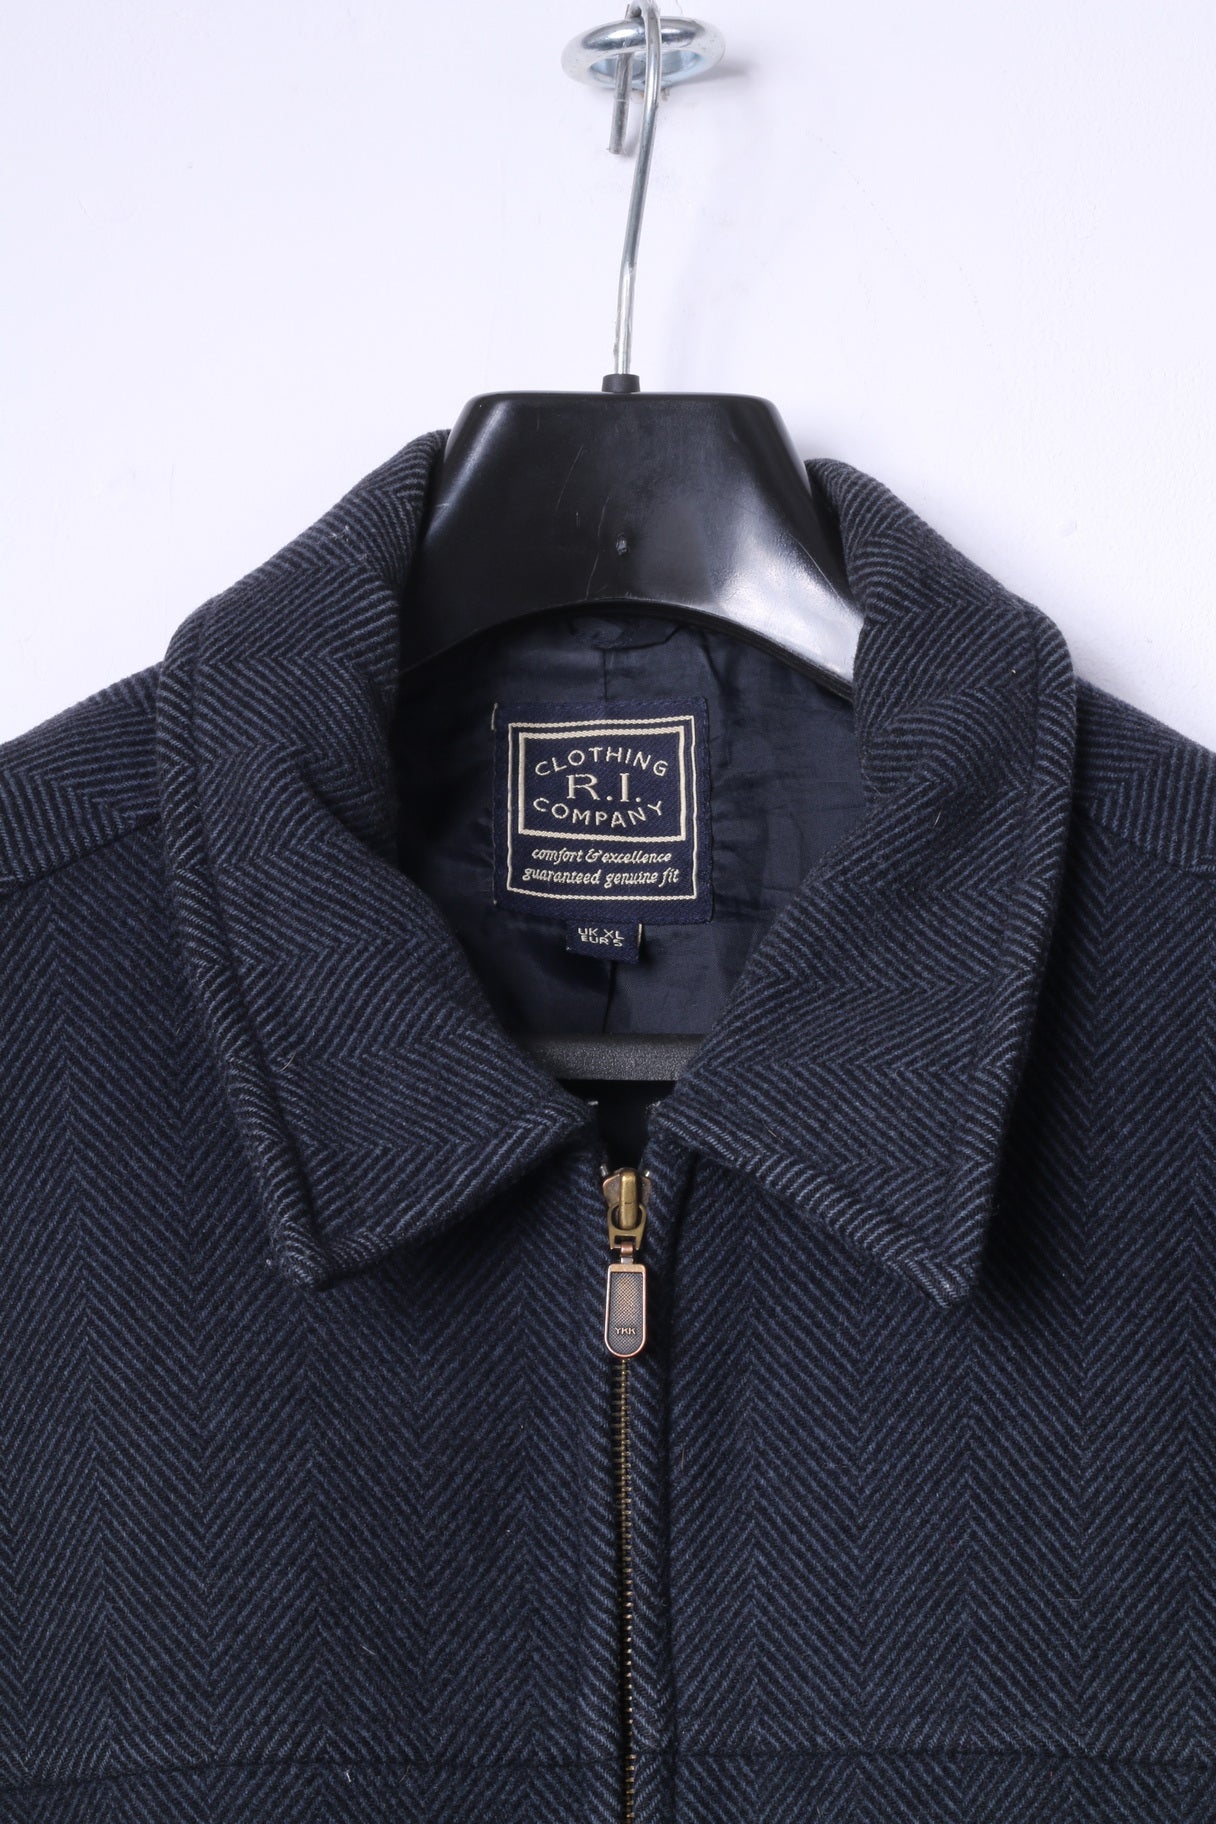 R.I. Clothing Company Mens XL Jacket Black Green Herringbone Wool